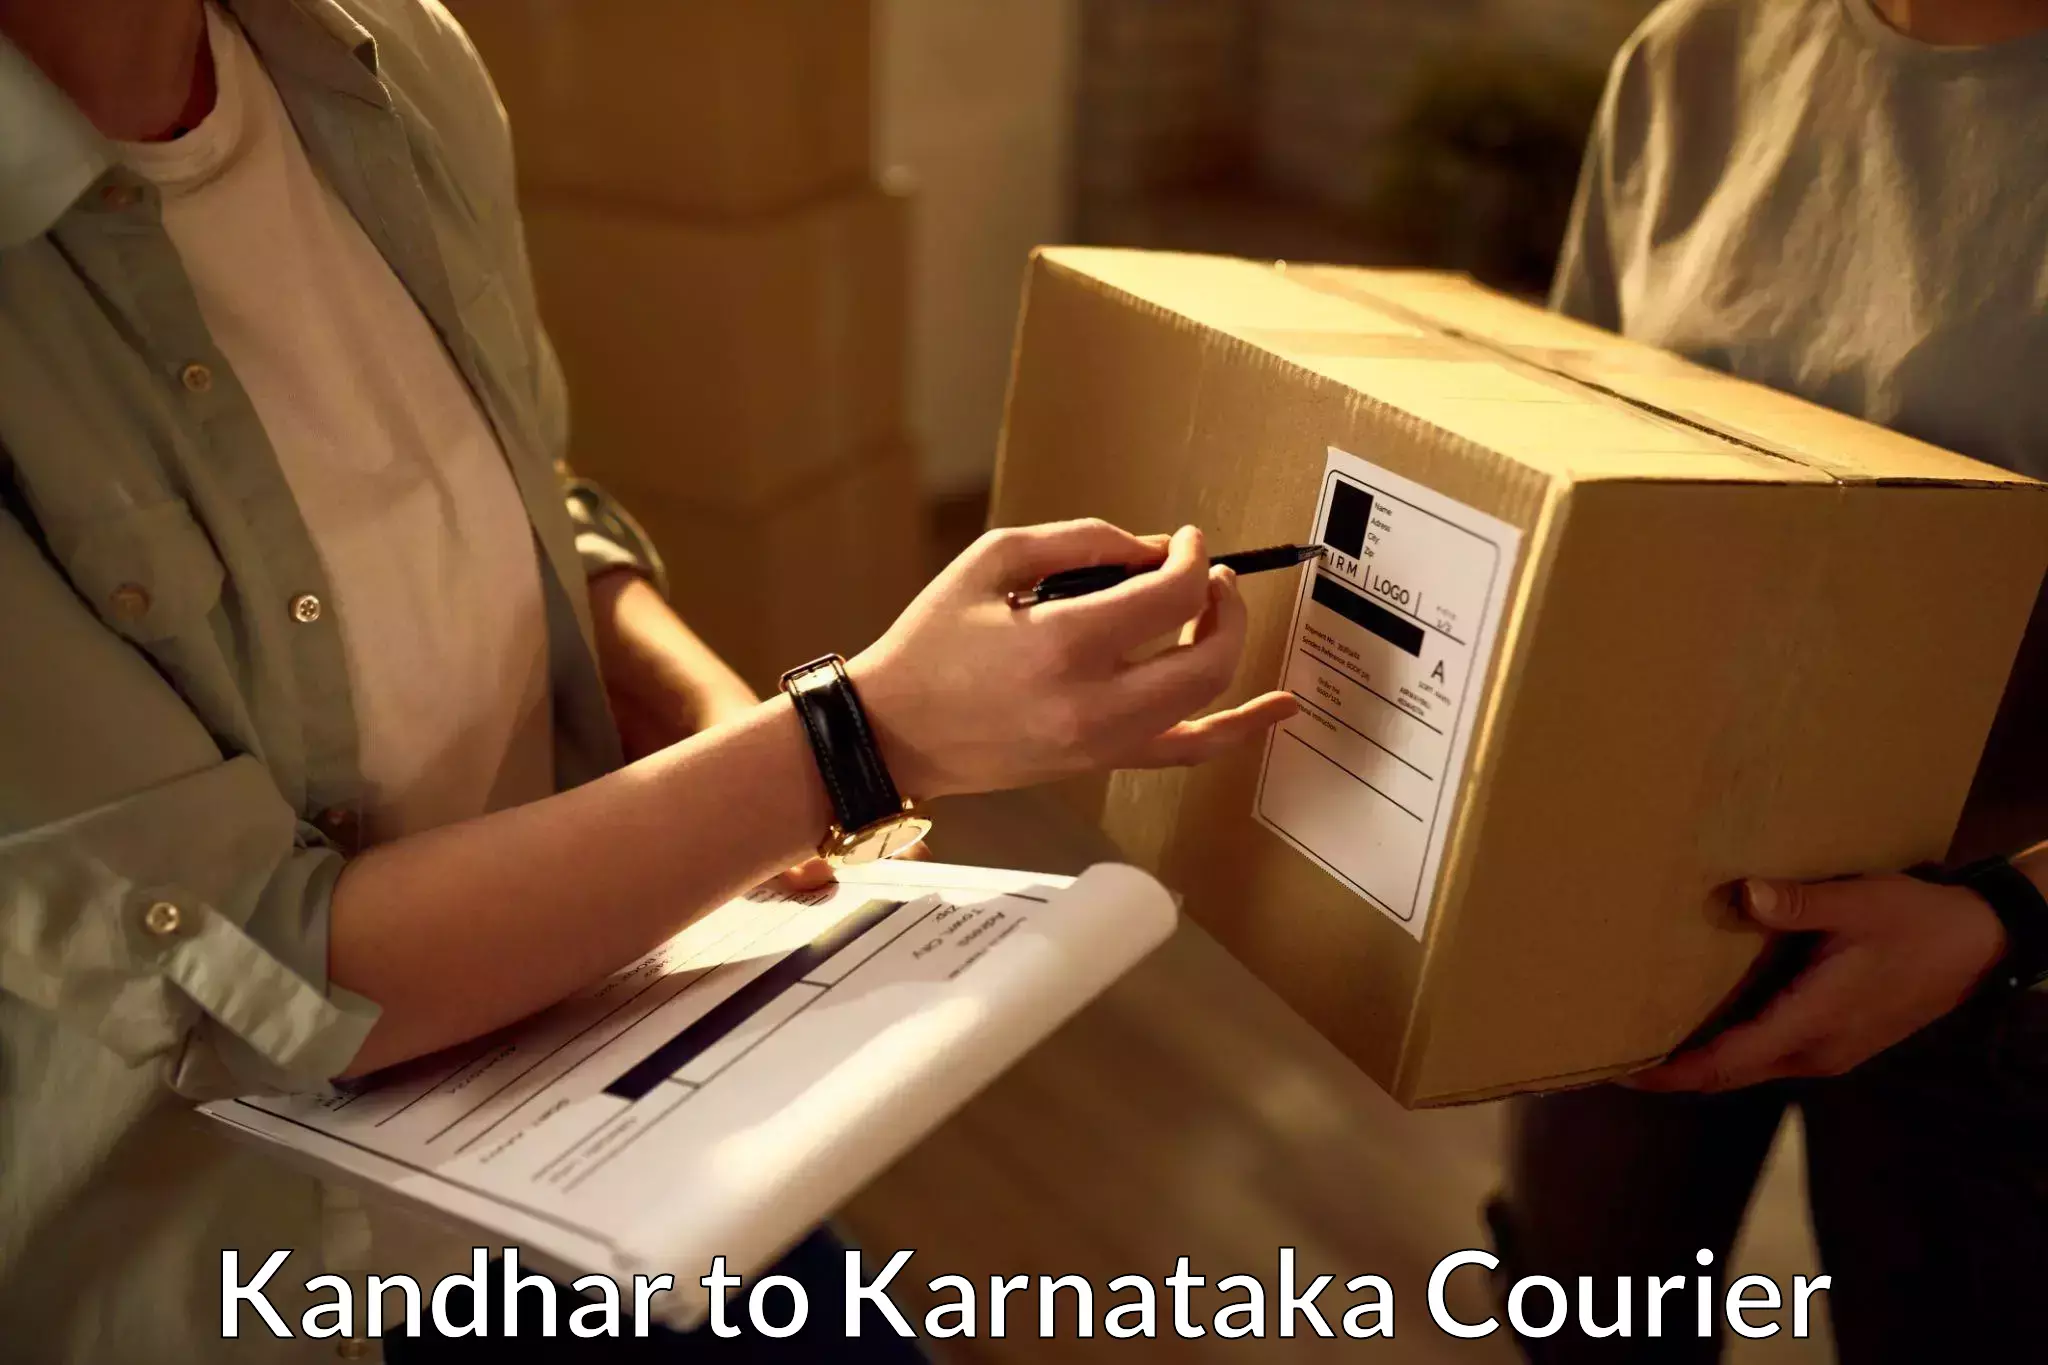 Doorstep delivery service Kandhar to Surathkal